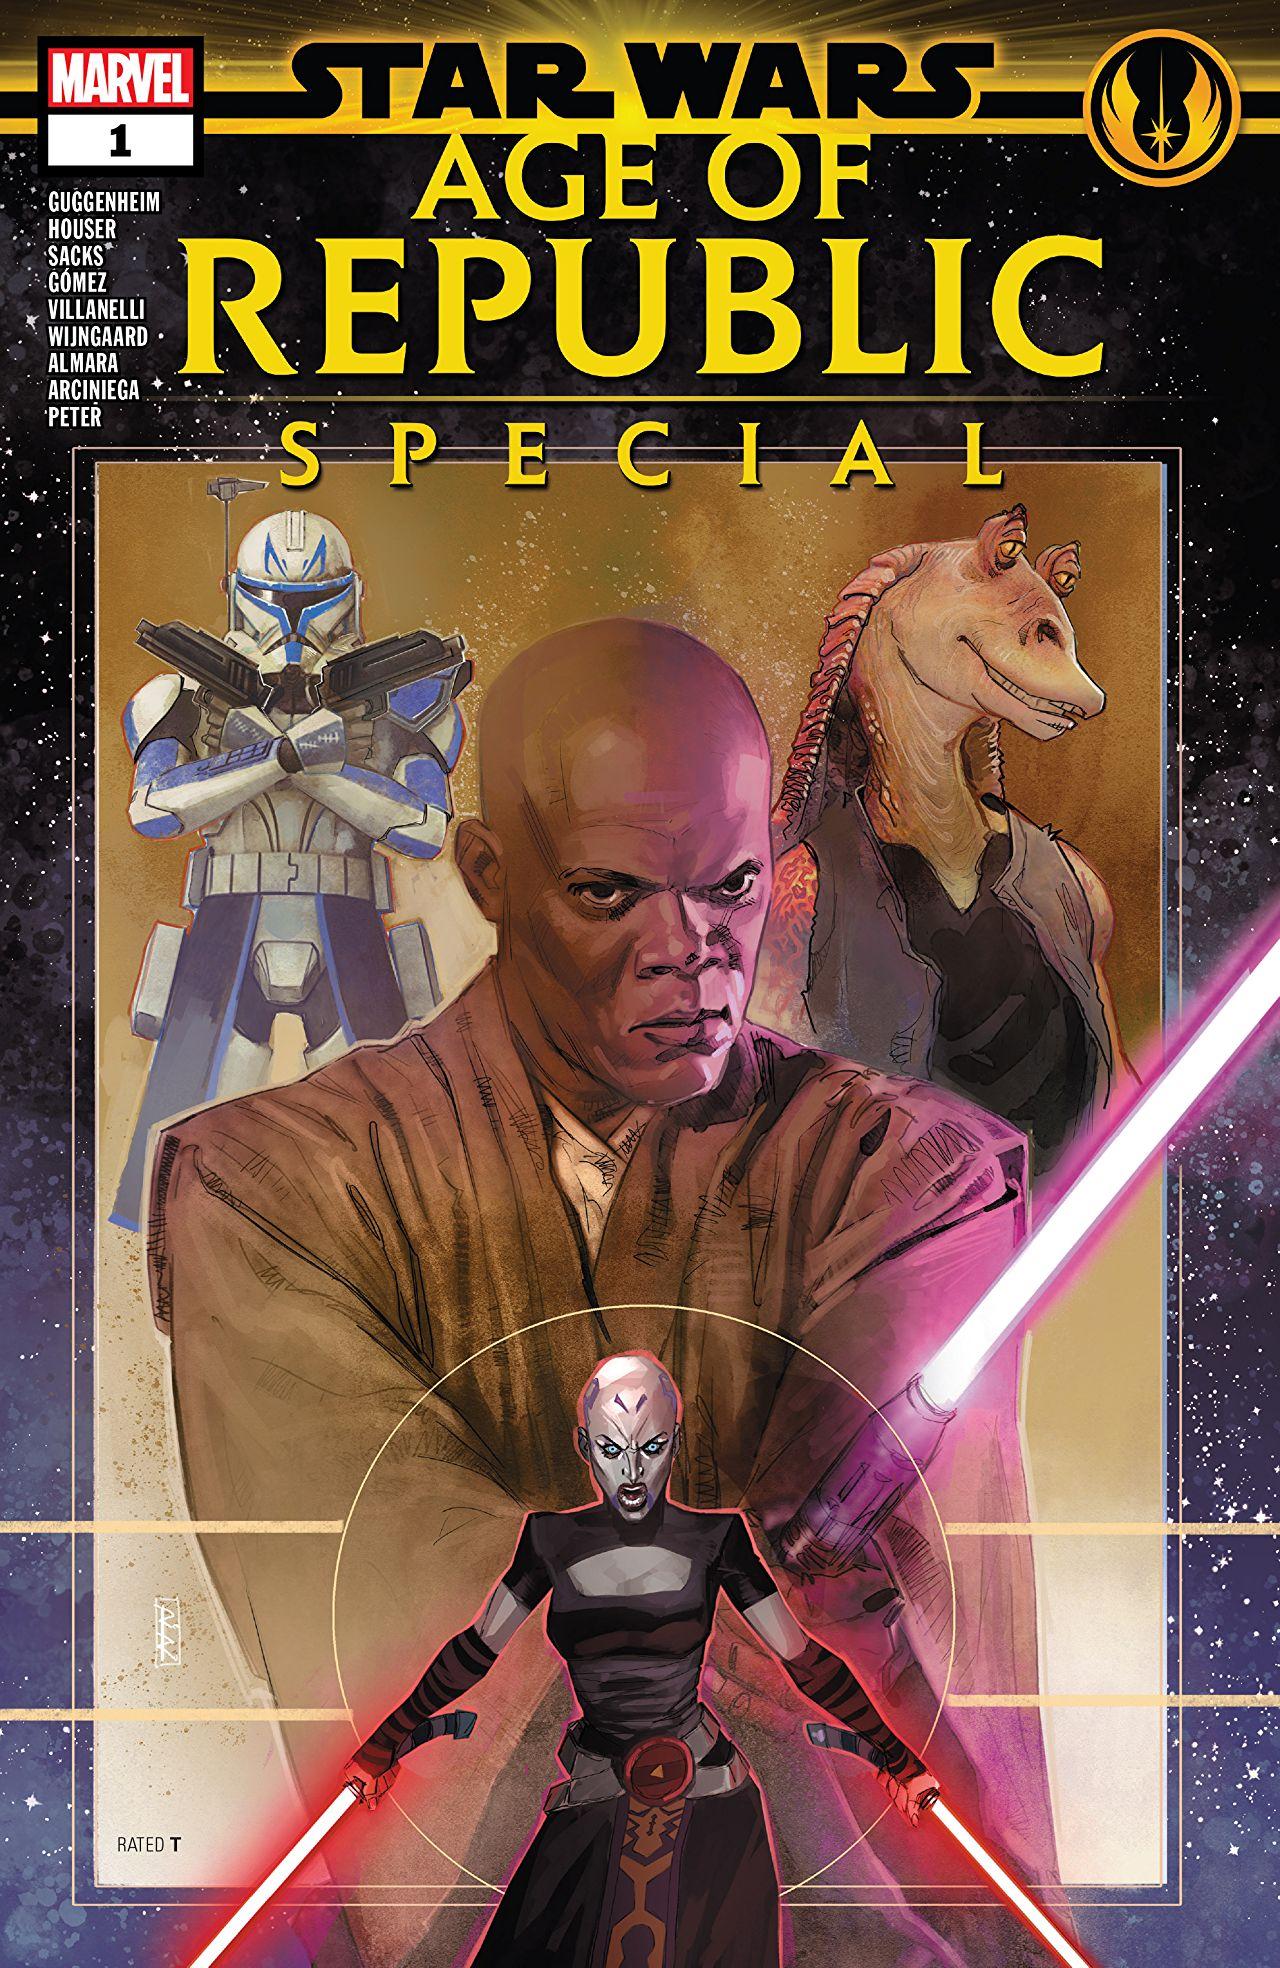 Star Wars: Age of Republic Special Vol. 1 #1